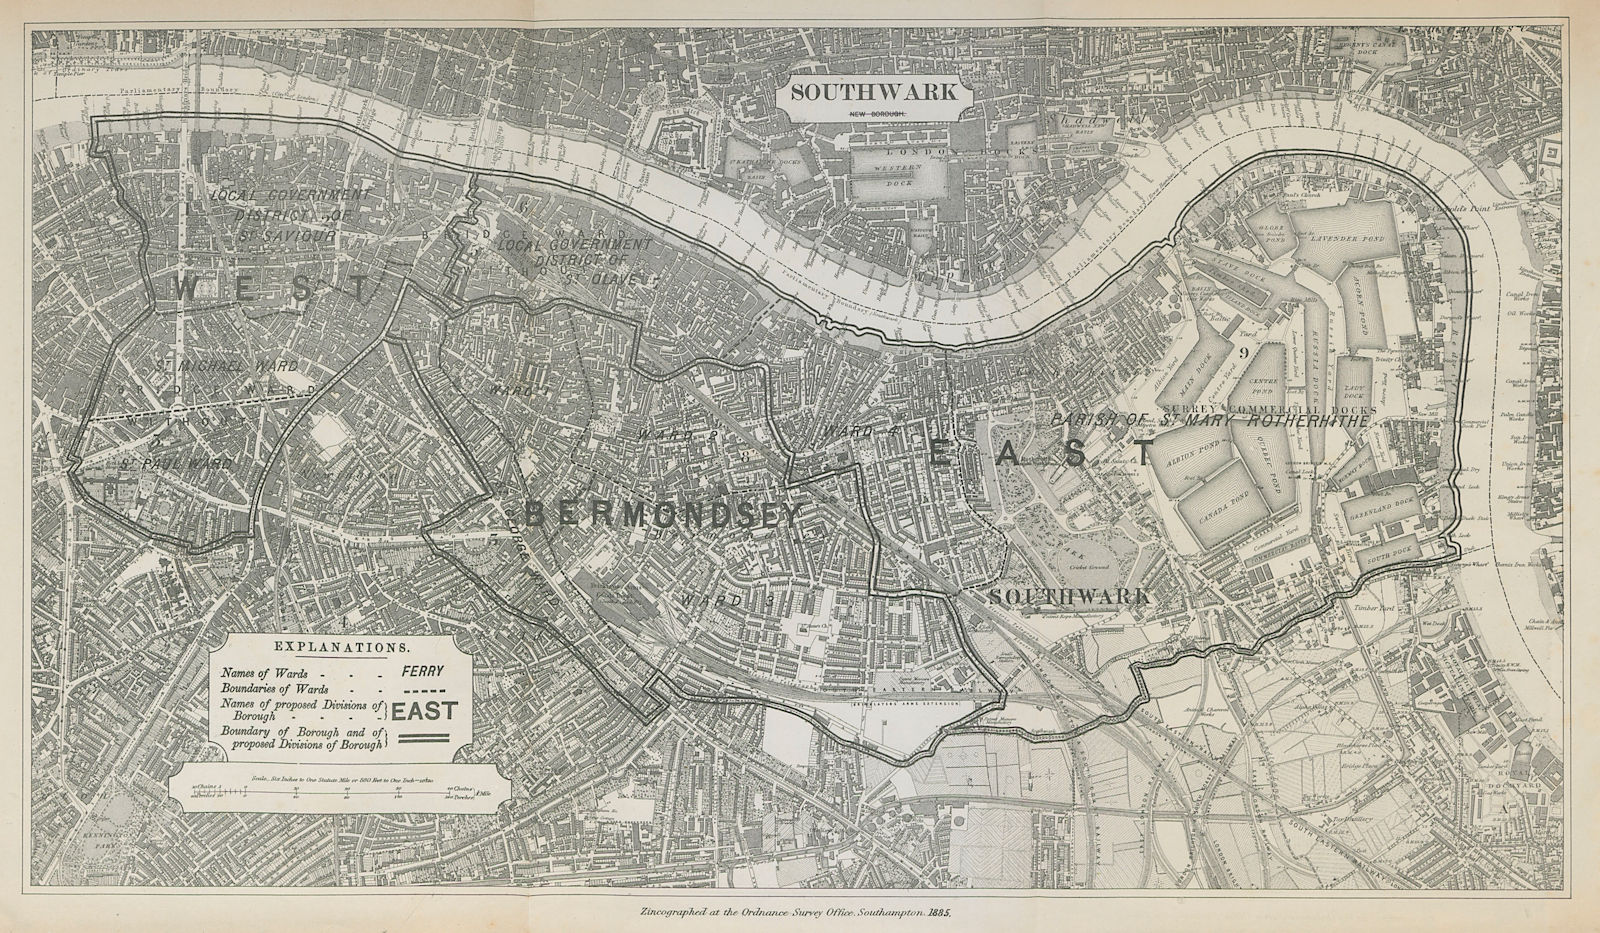 Southwark Parliamentary Borough. Bermondsey R'hithe BOUNDARY COMMISSION 1885 map